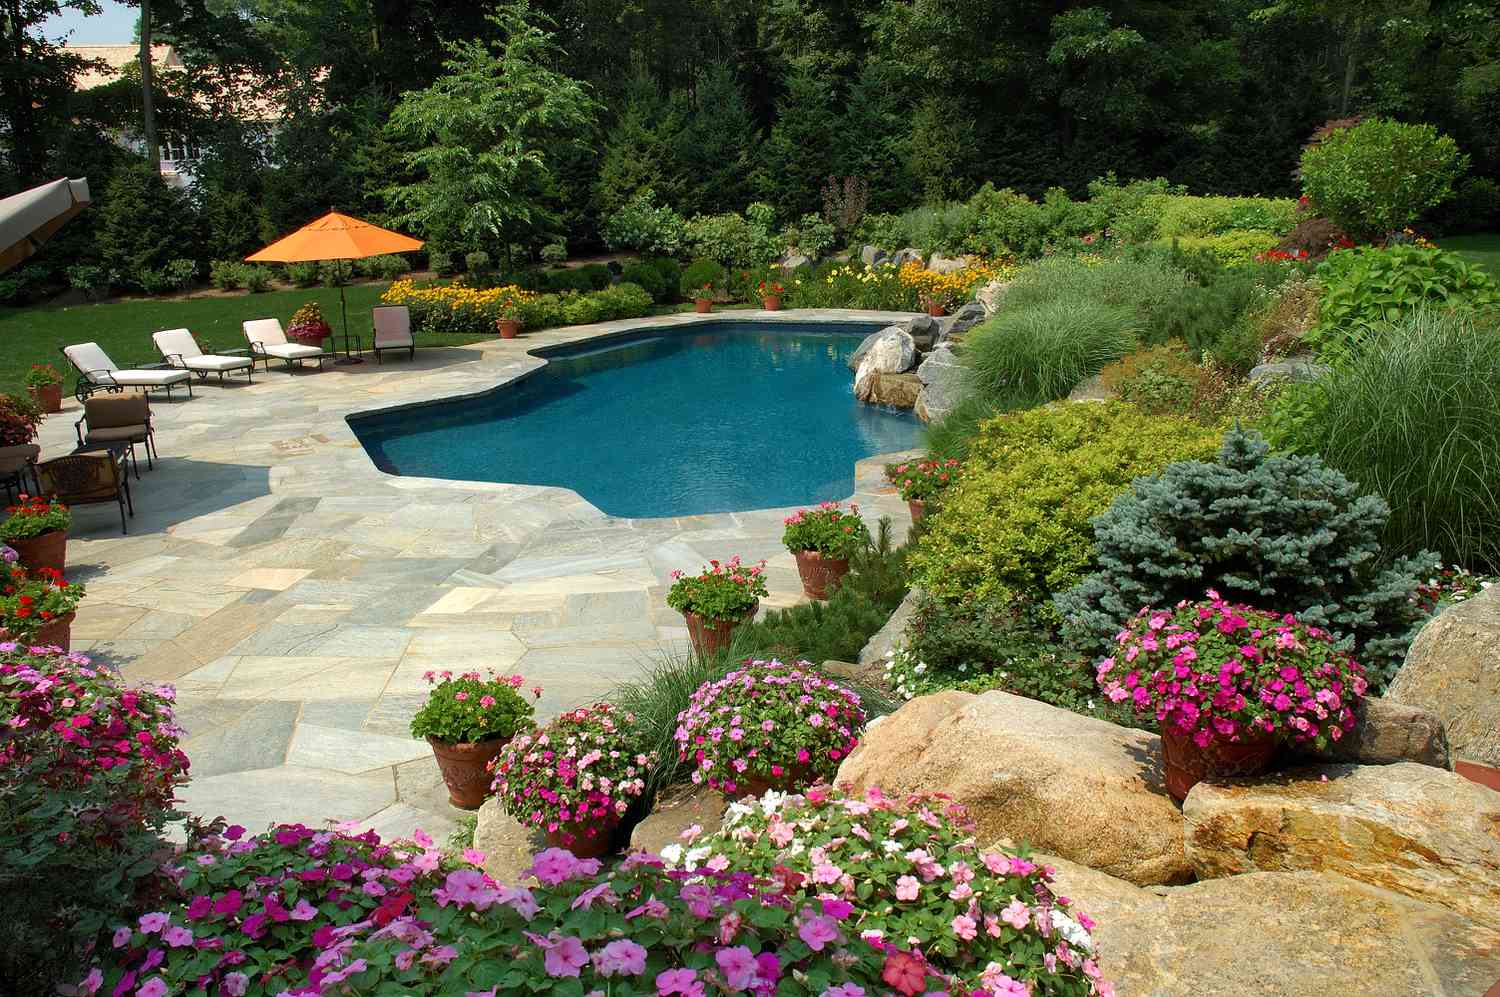 How To Build A Backyard Pool